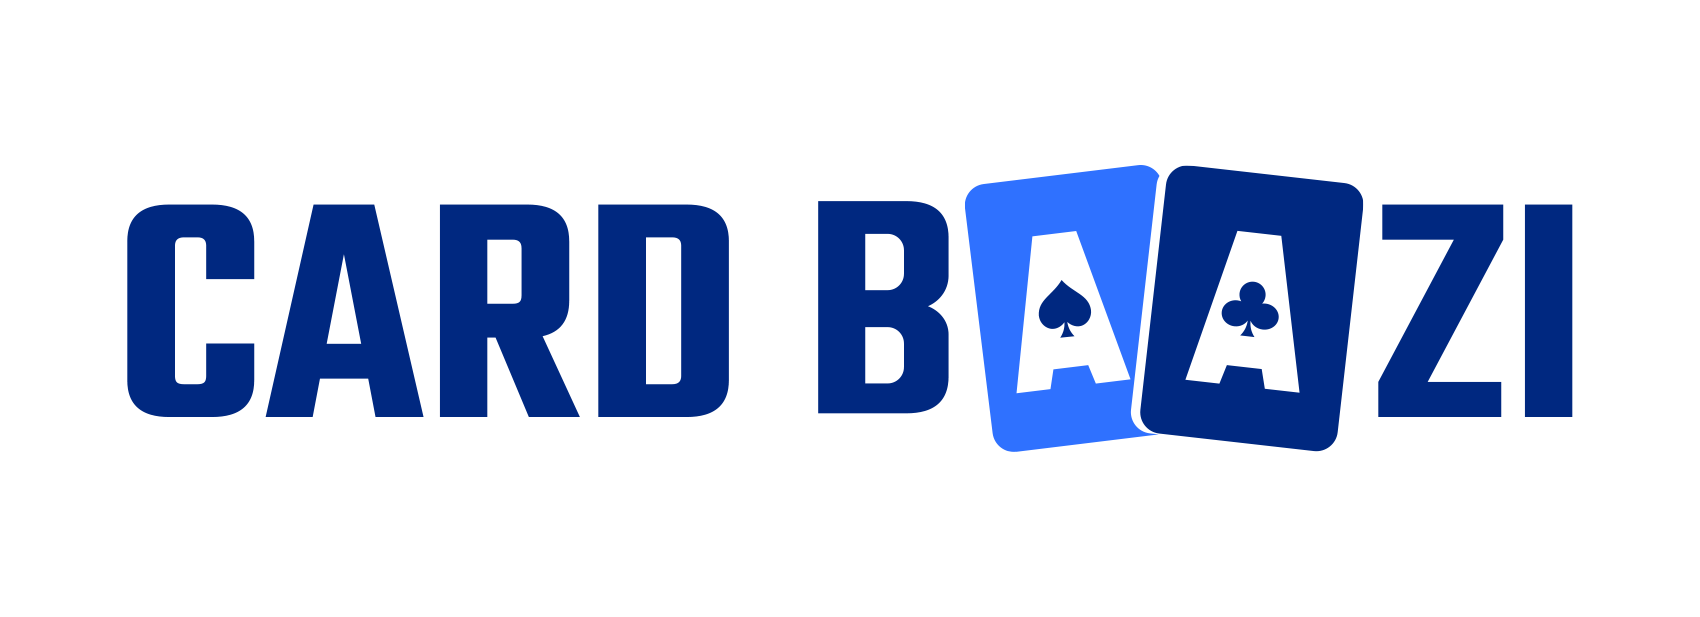 CardBaazi Poker